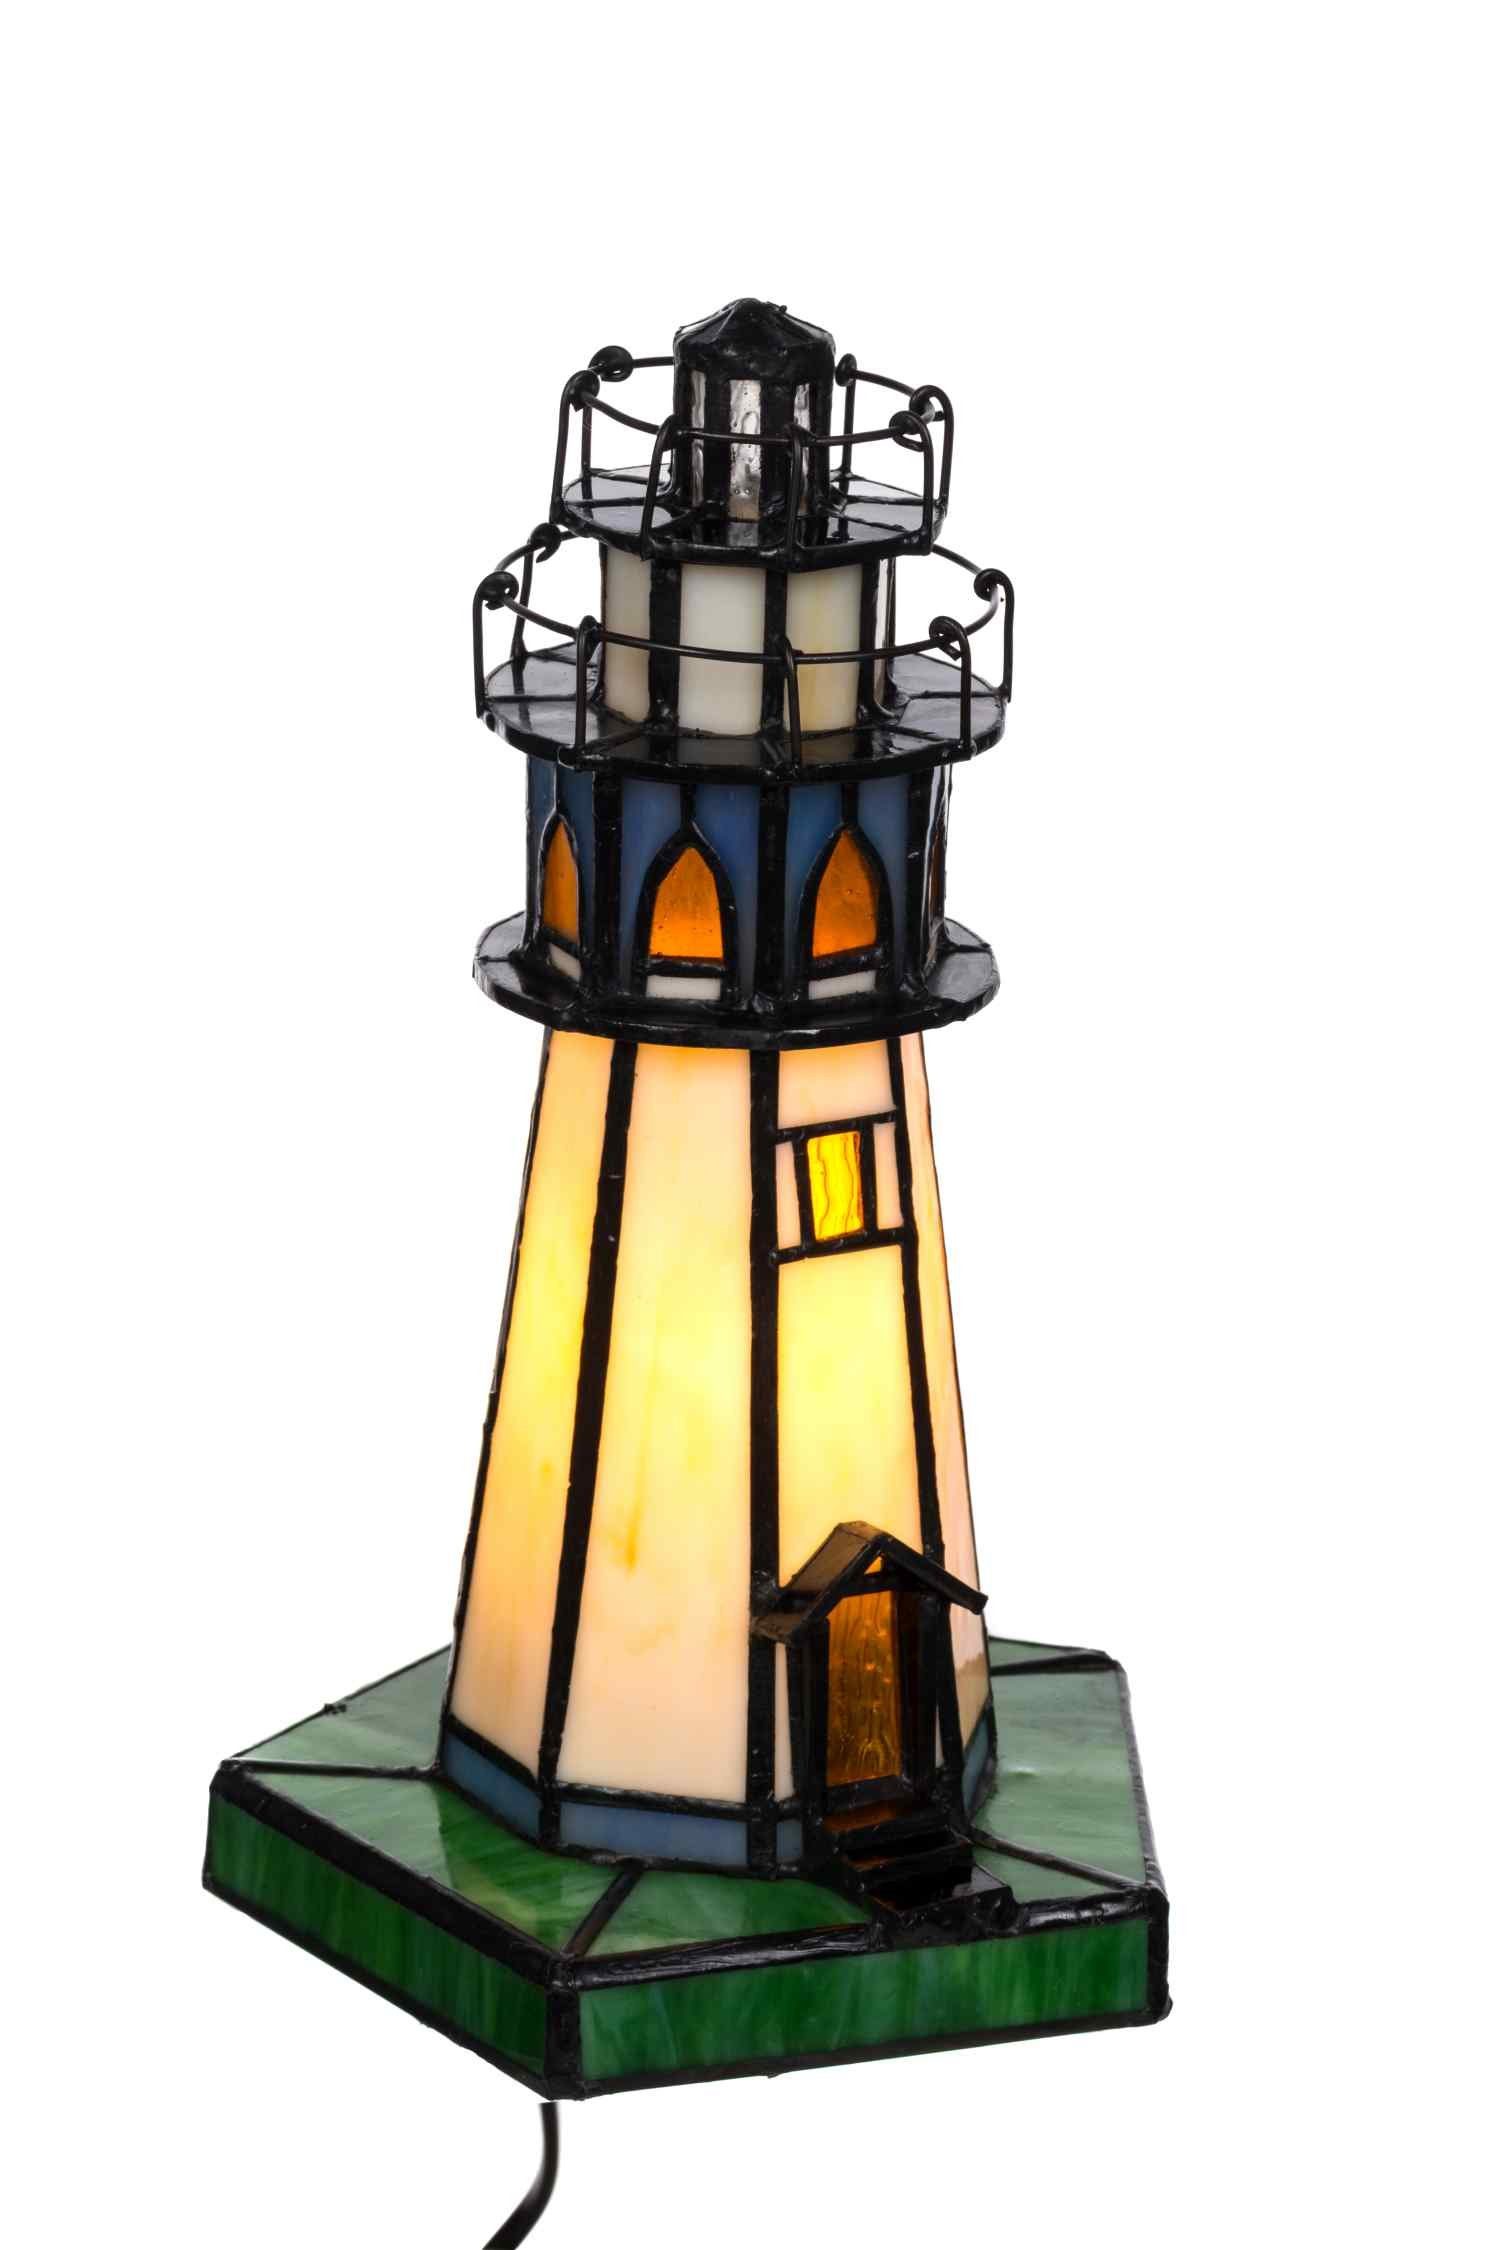 BIRENDY Stehlampe Tischlampe im Tiffany Style Leuchtturm Tiff 130 Motiv Lampe